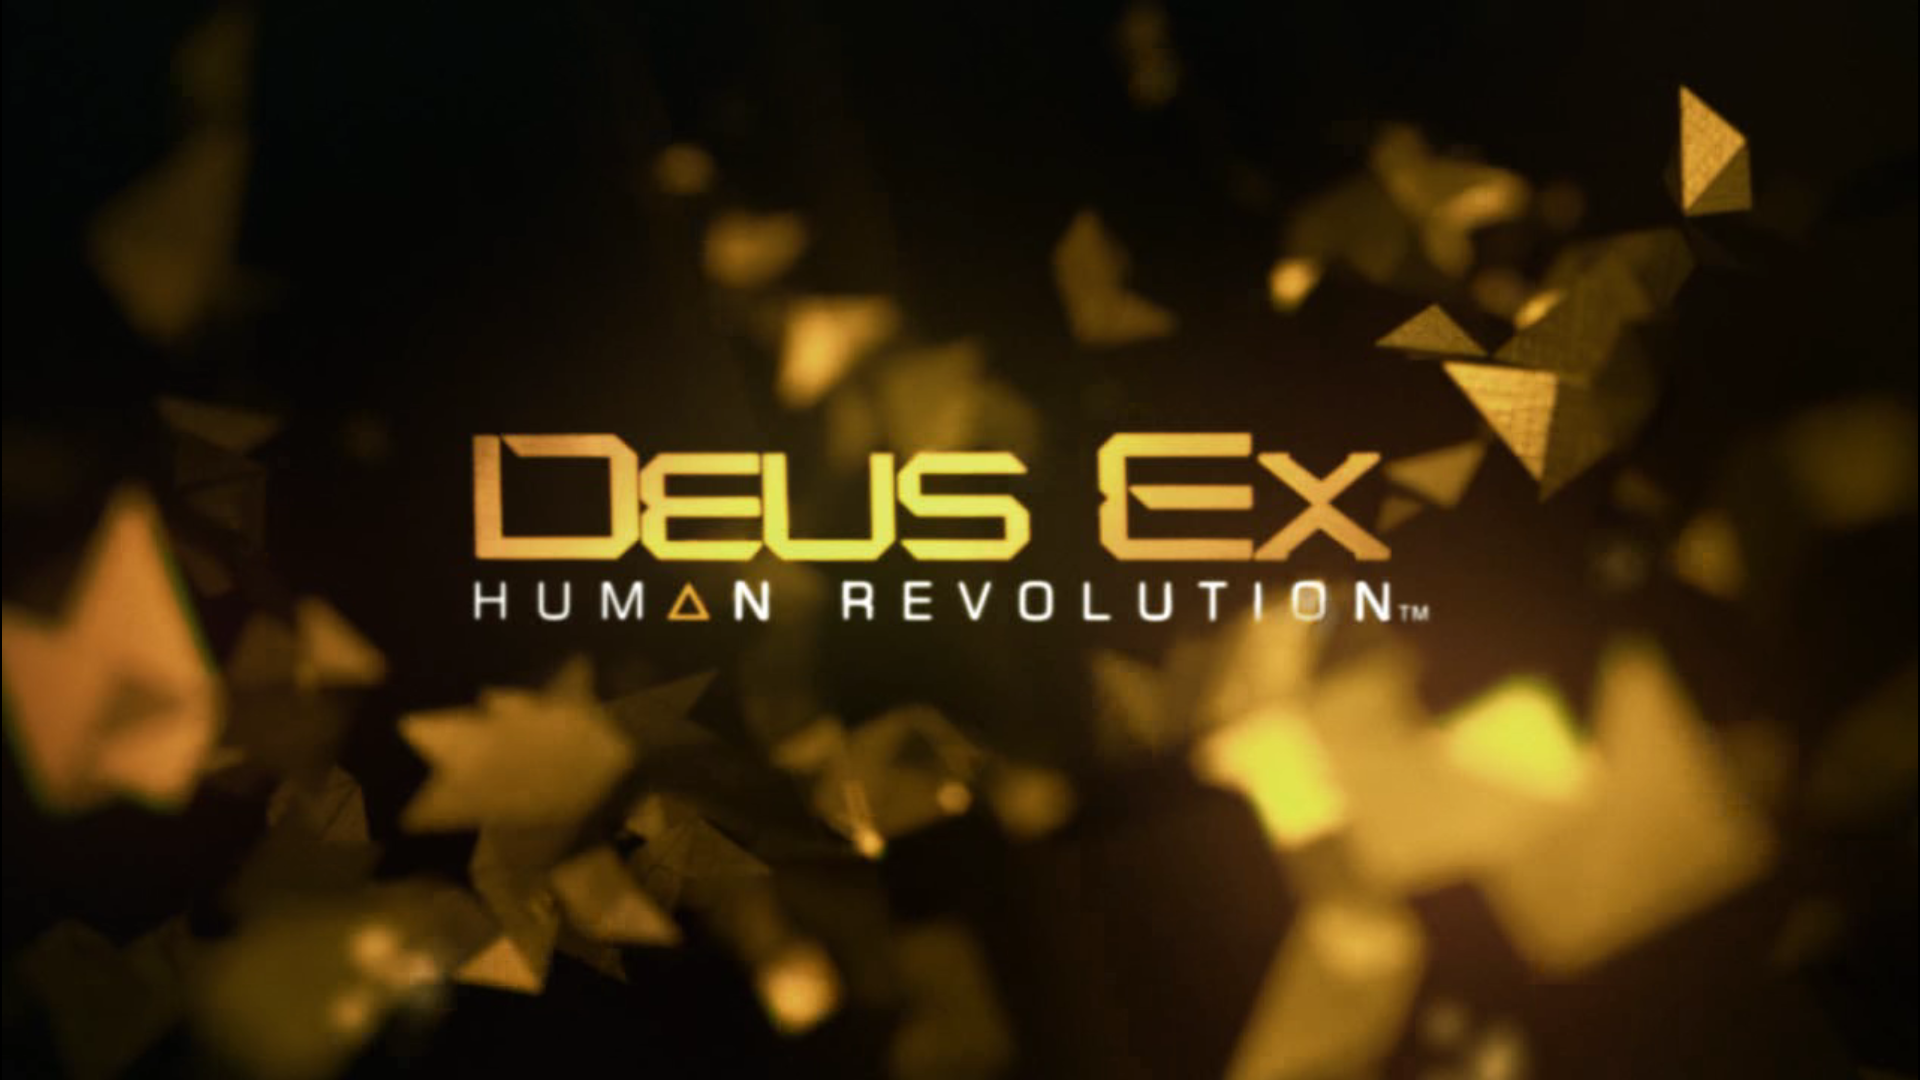 Human Revolution, Deus Ex Fan Film